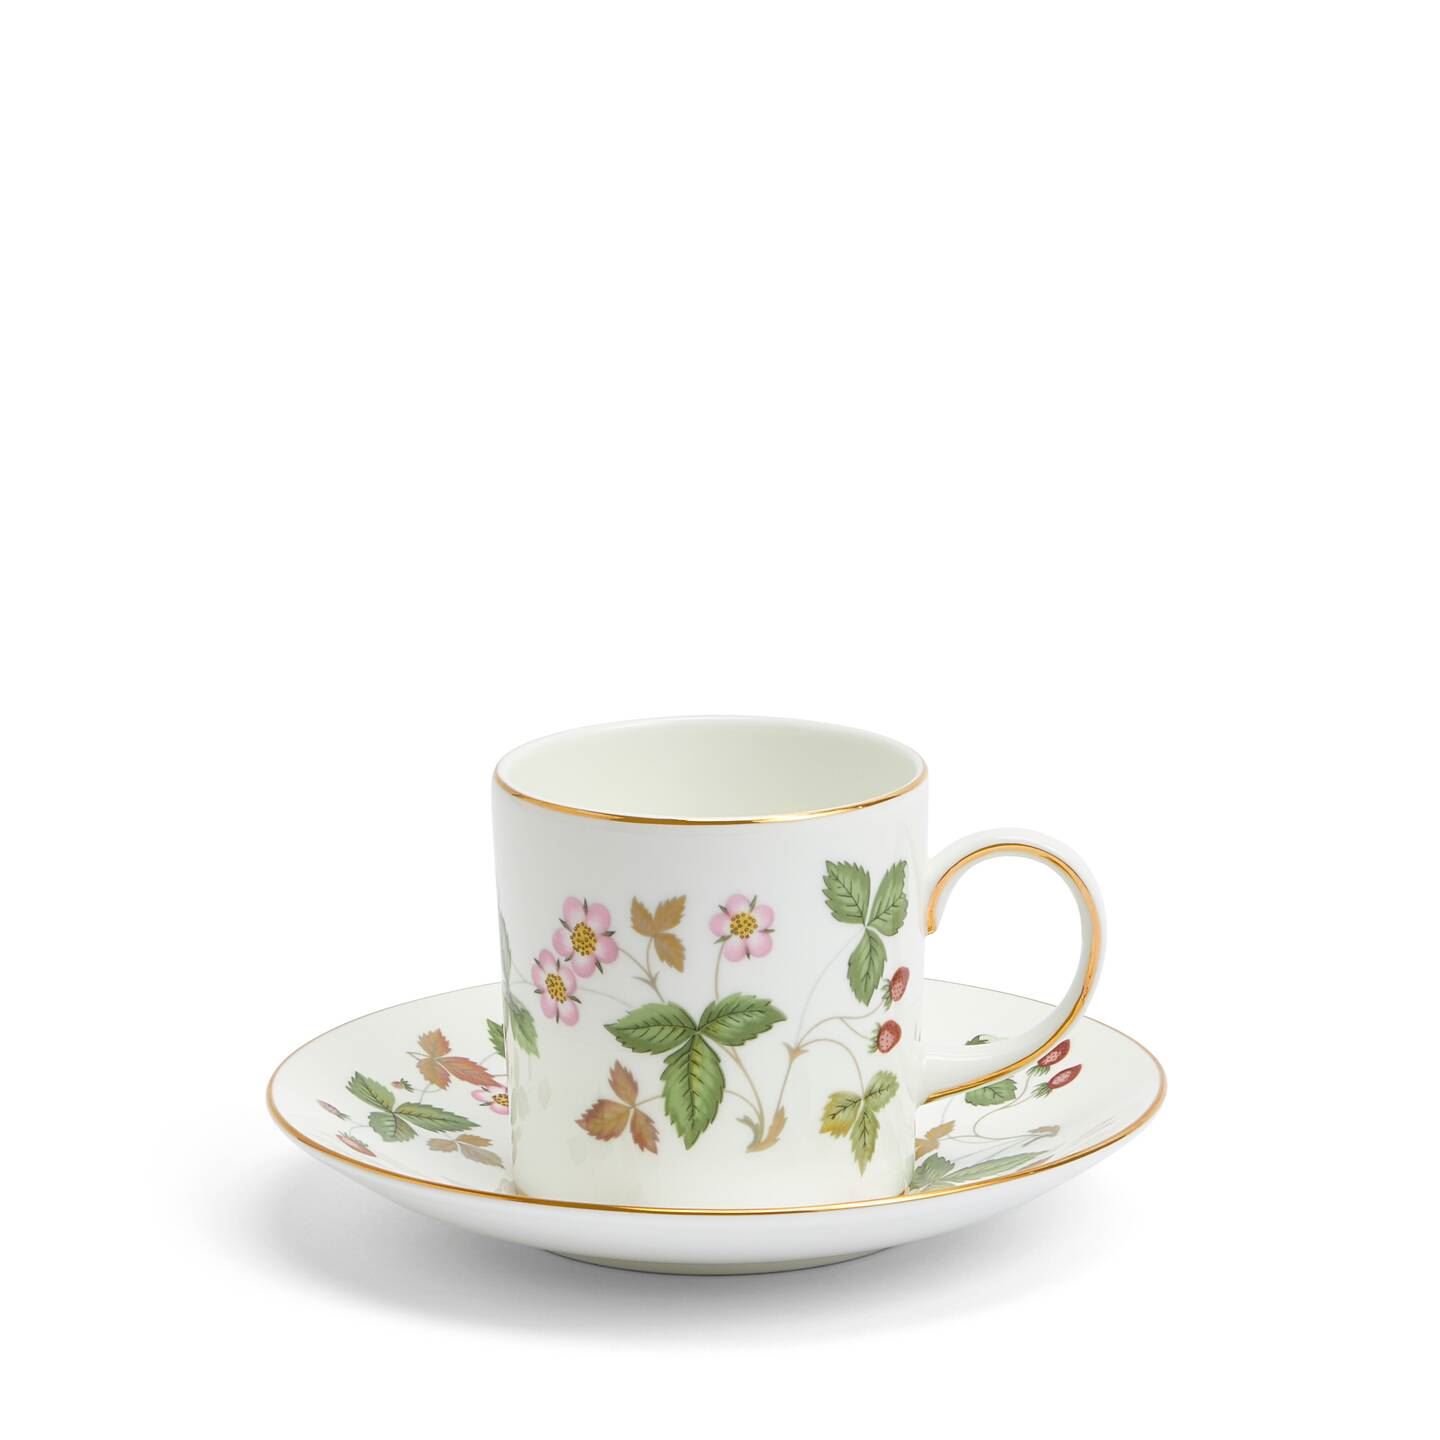 Wedgwood "Wild Strawberry" bone china tableware Tea Cup and Saucer 